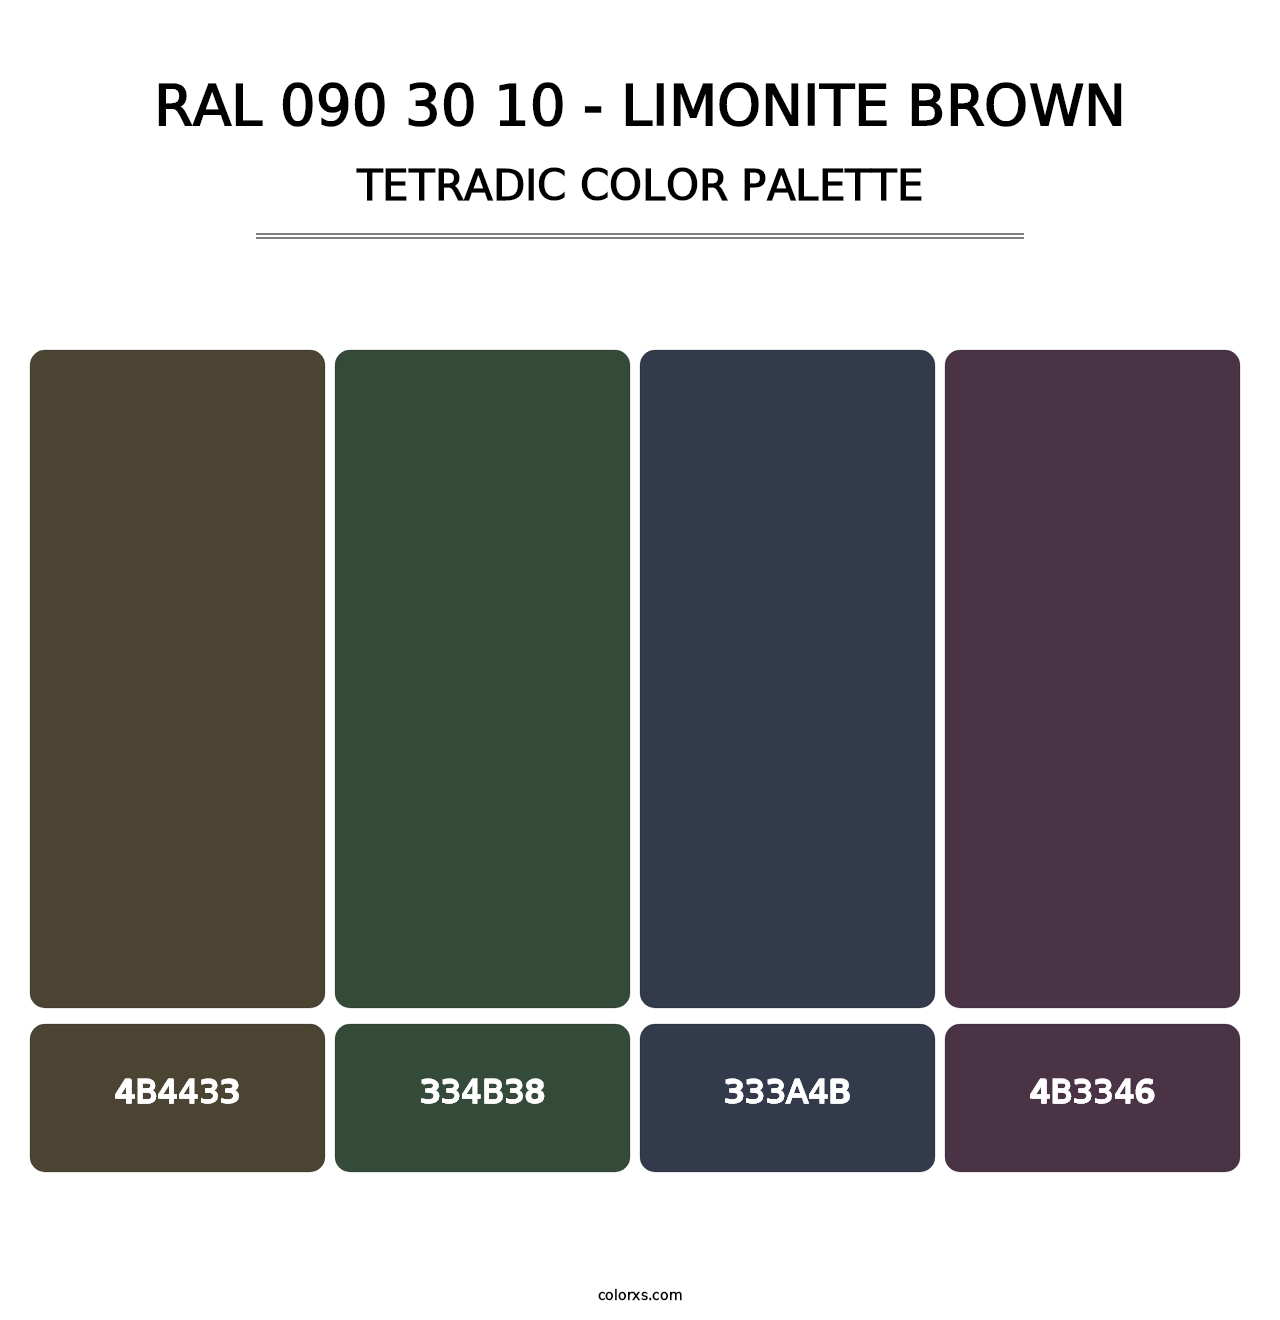 RAL 090 30 10 - Limonite Brown - Tetradic Color Palette